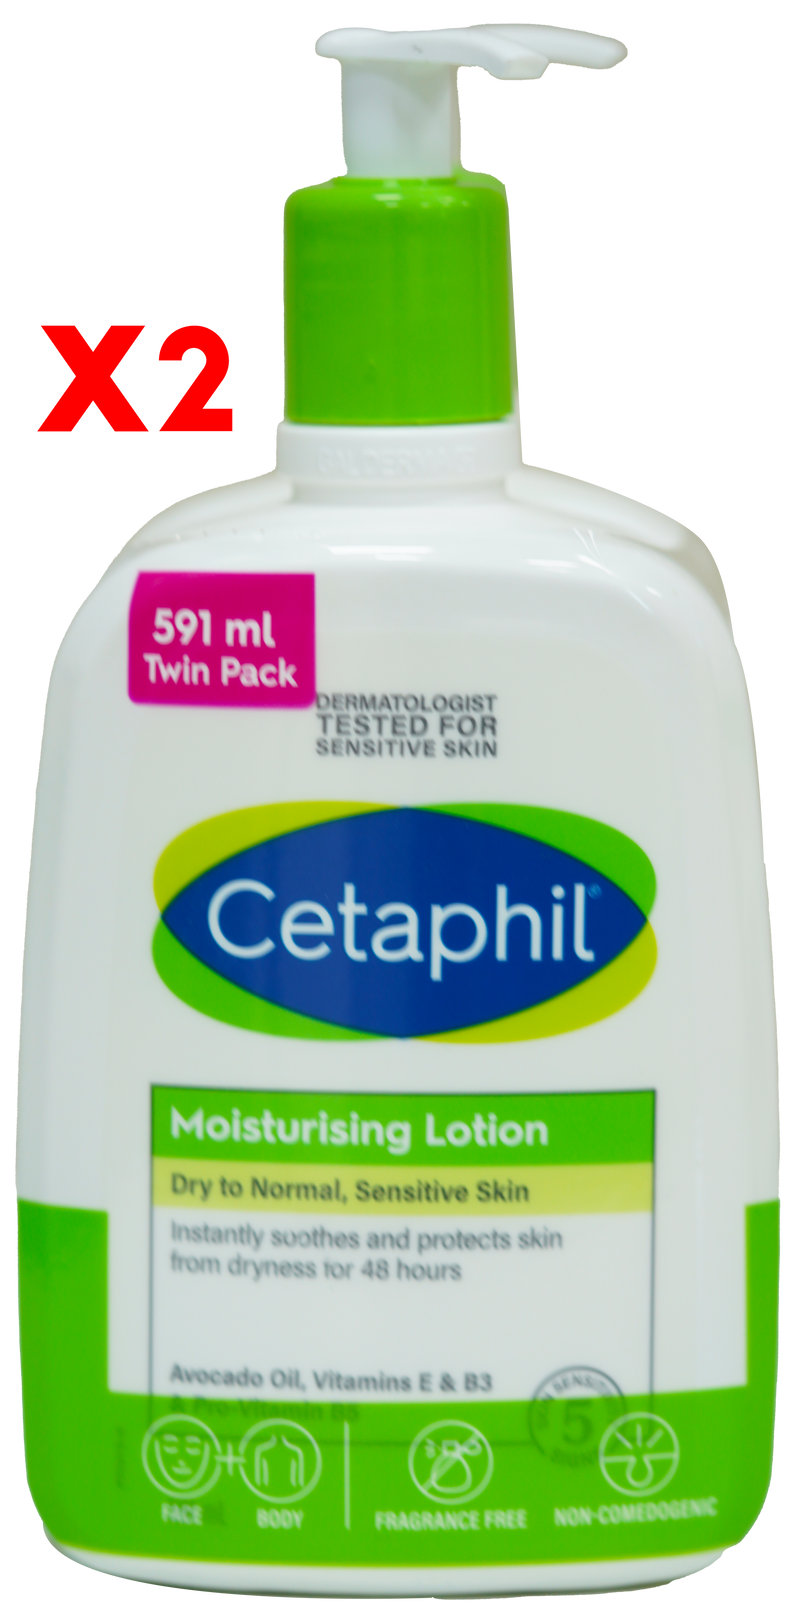 Cetaphil - Cetaphil Moisturising Lotion(Green) 591ml x 2